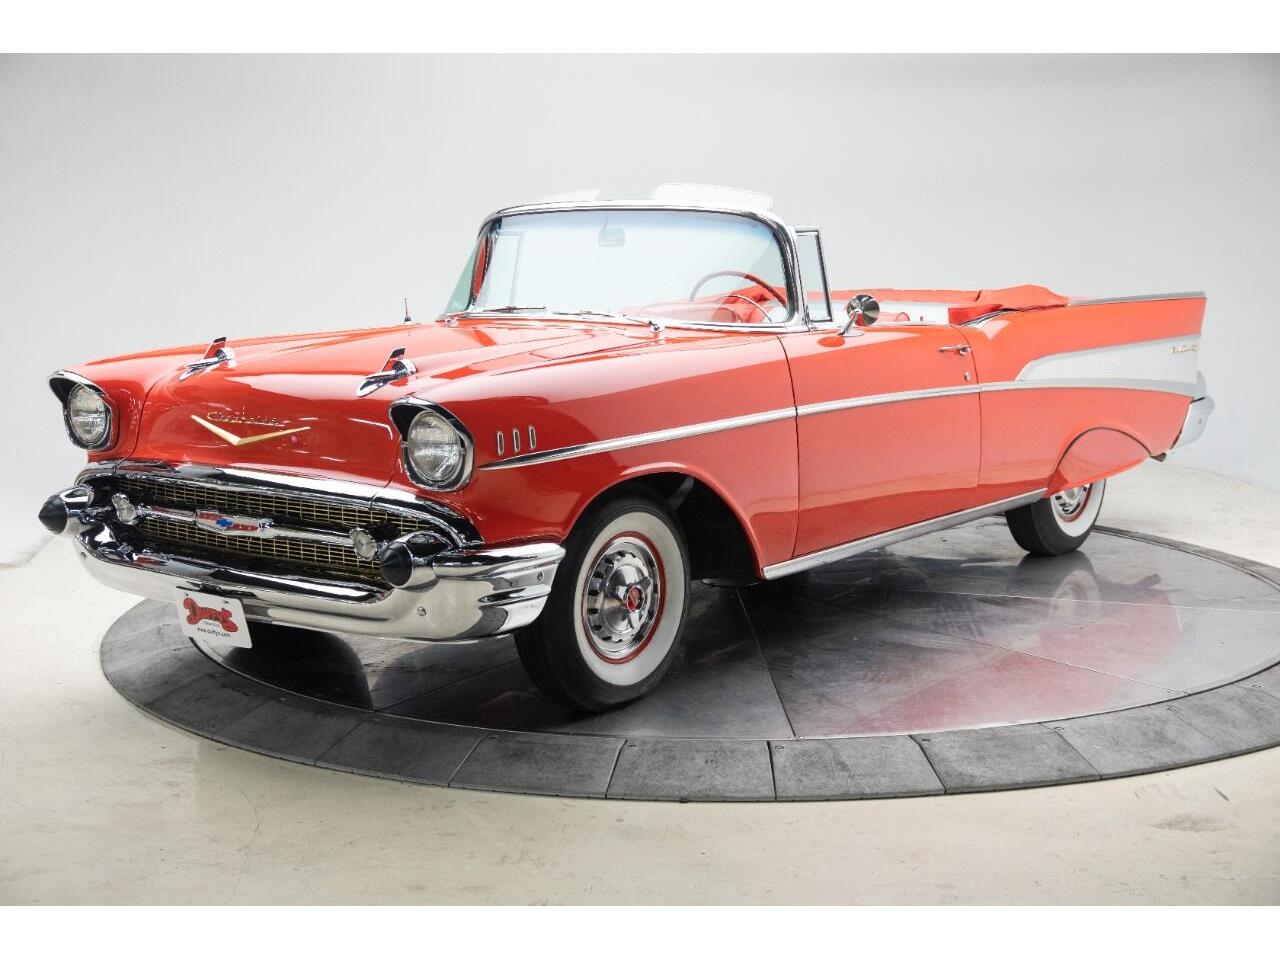 For Sale: 1957 Chevrolet Bel Air in Cedar Rapids, Iowa for sale in Cedar Rapids, IA